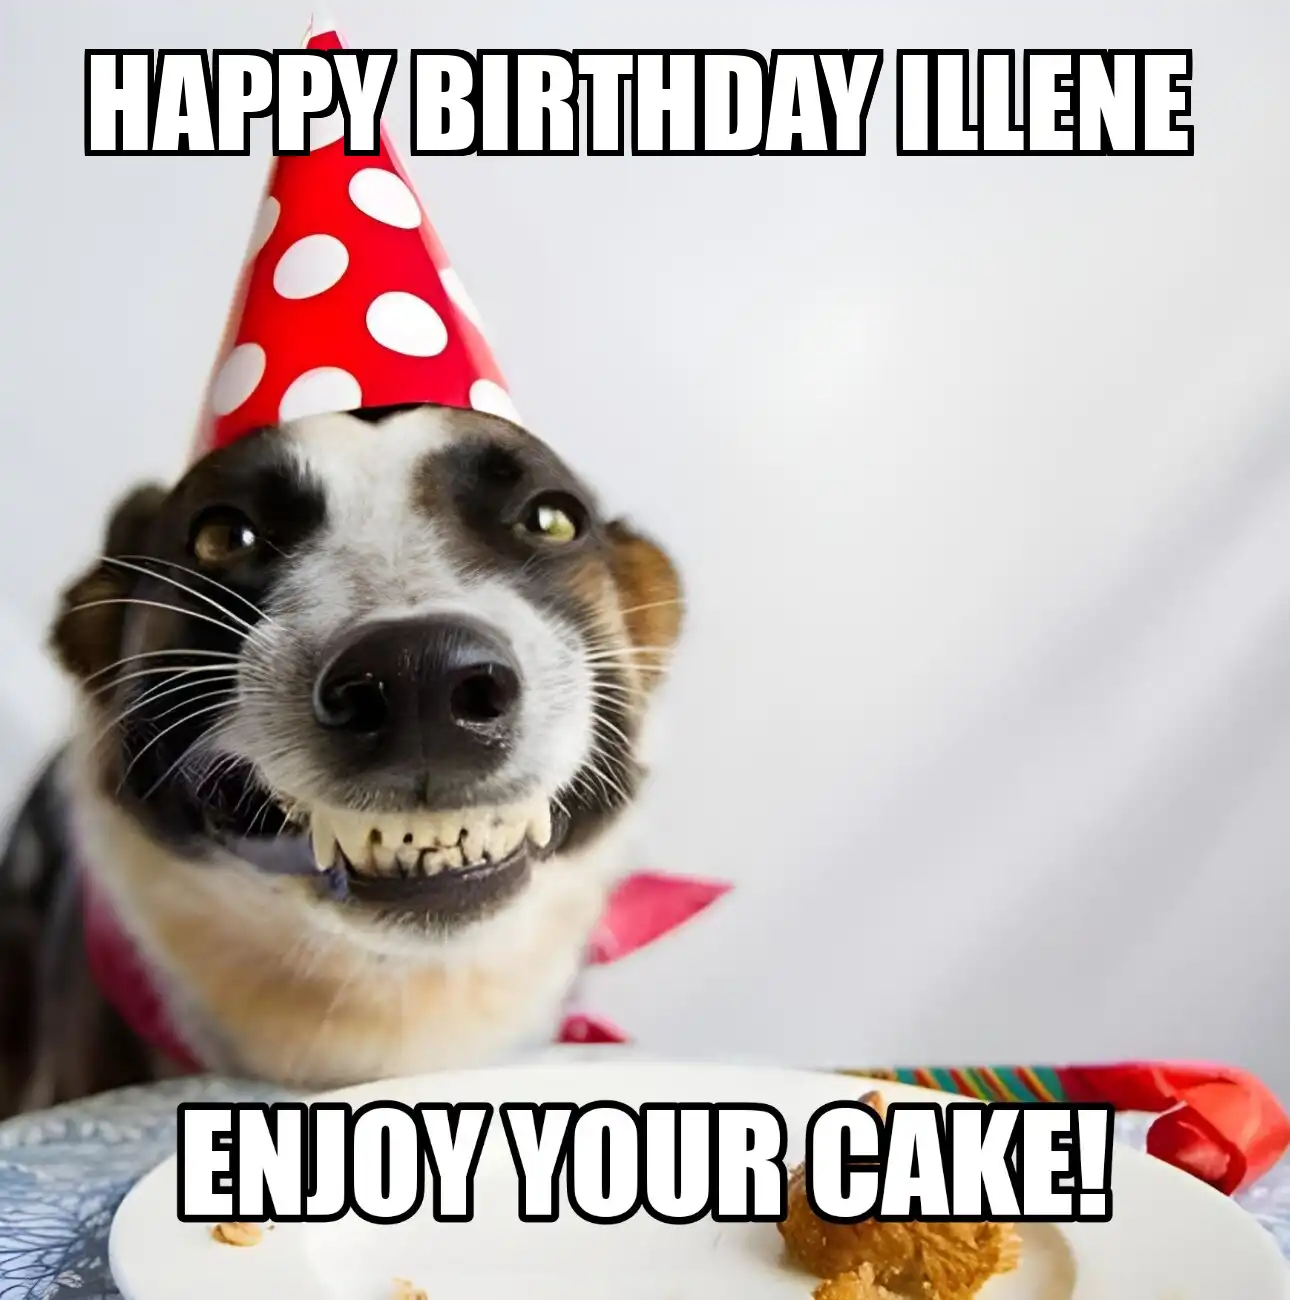 Happy Birthday Illene Enjoy Your Cake Dog Meme